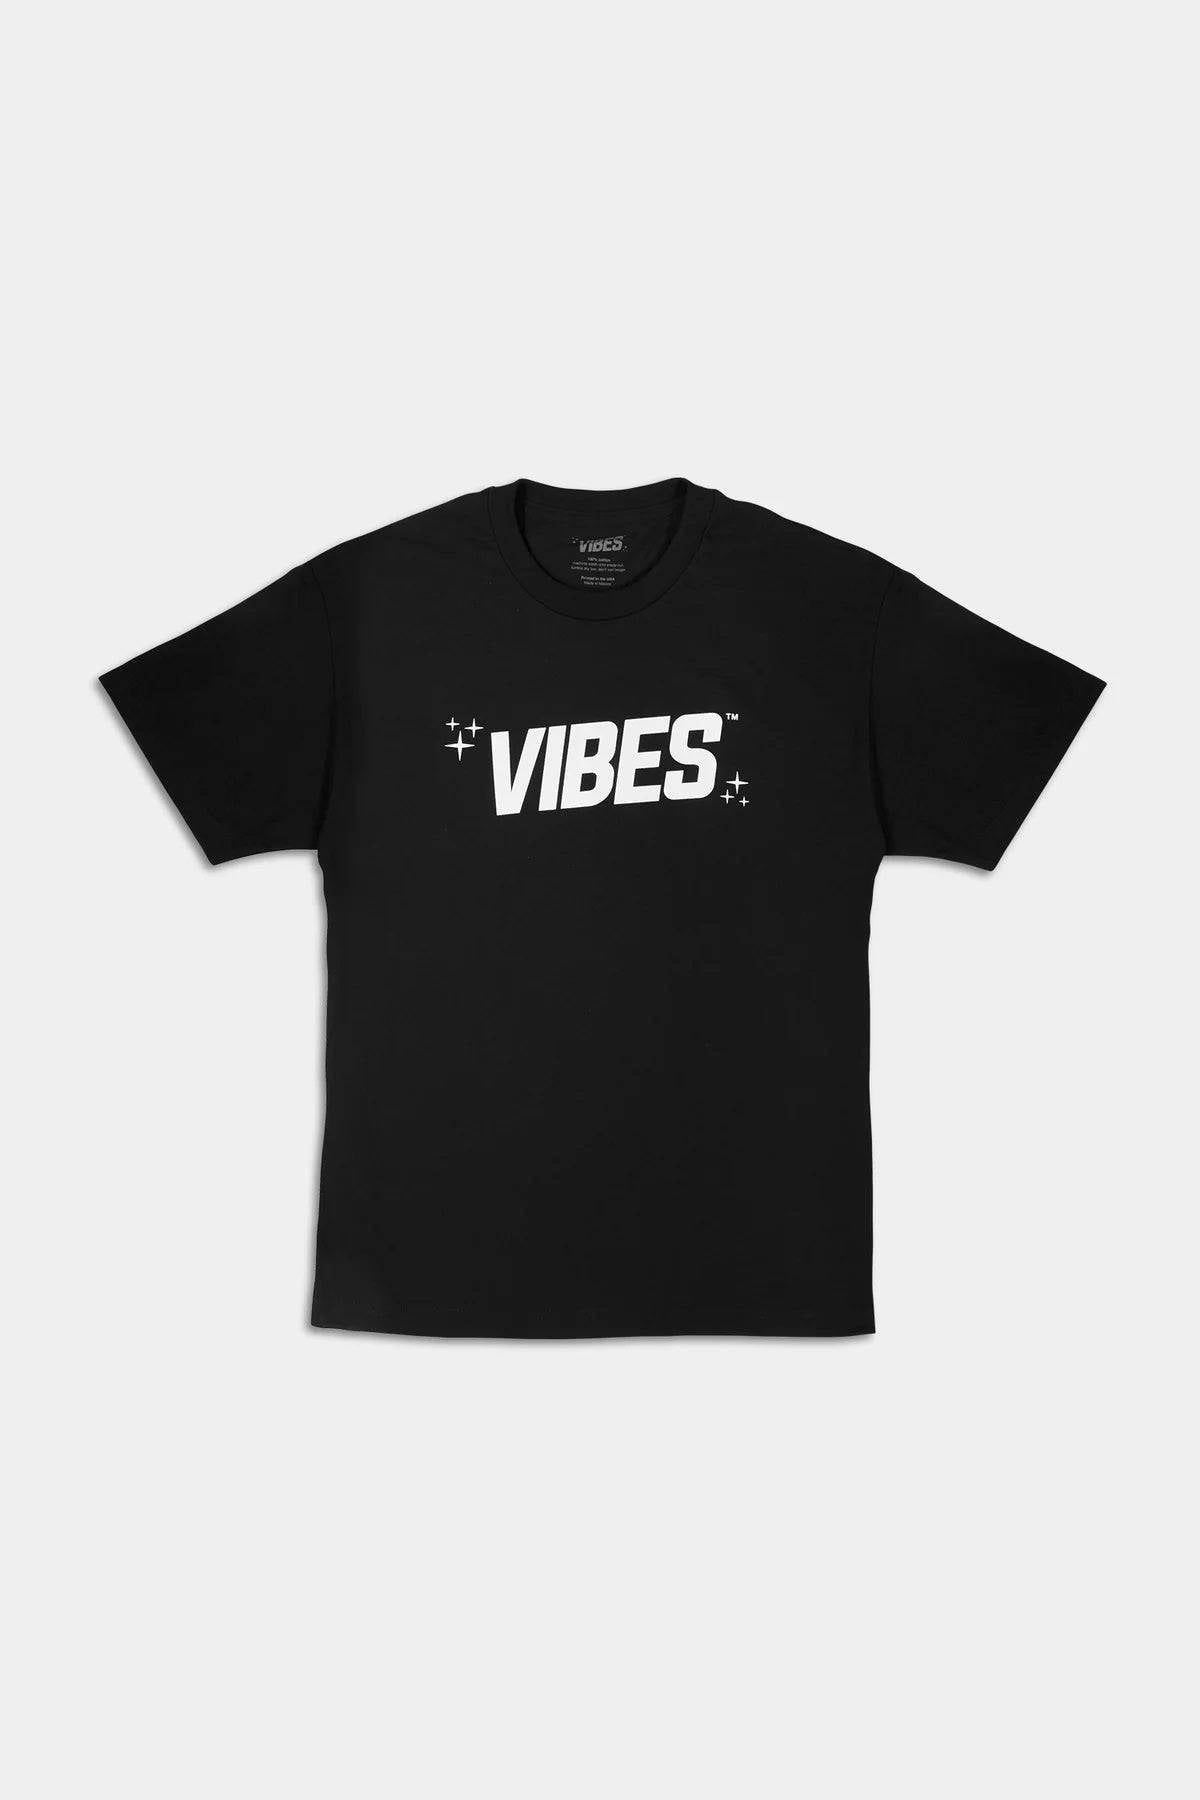 VIBES Black With White Logo T-Shirt 2X-Large